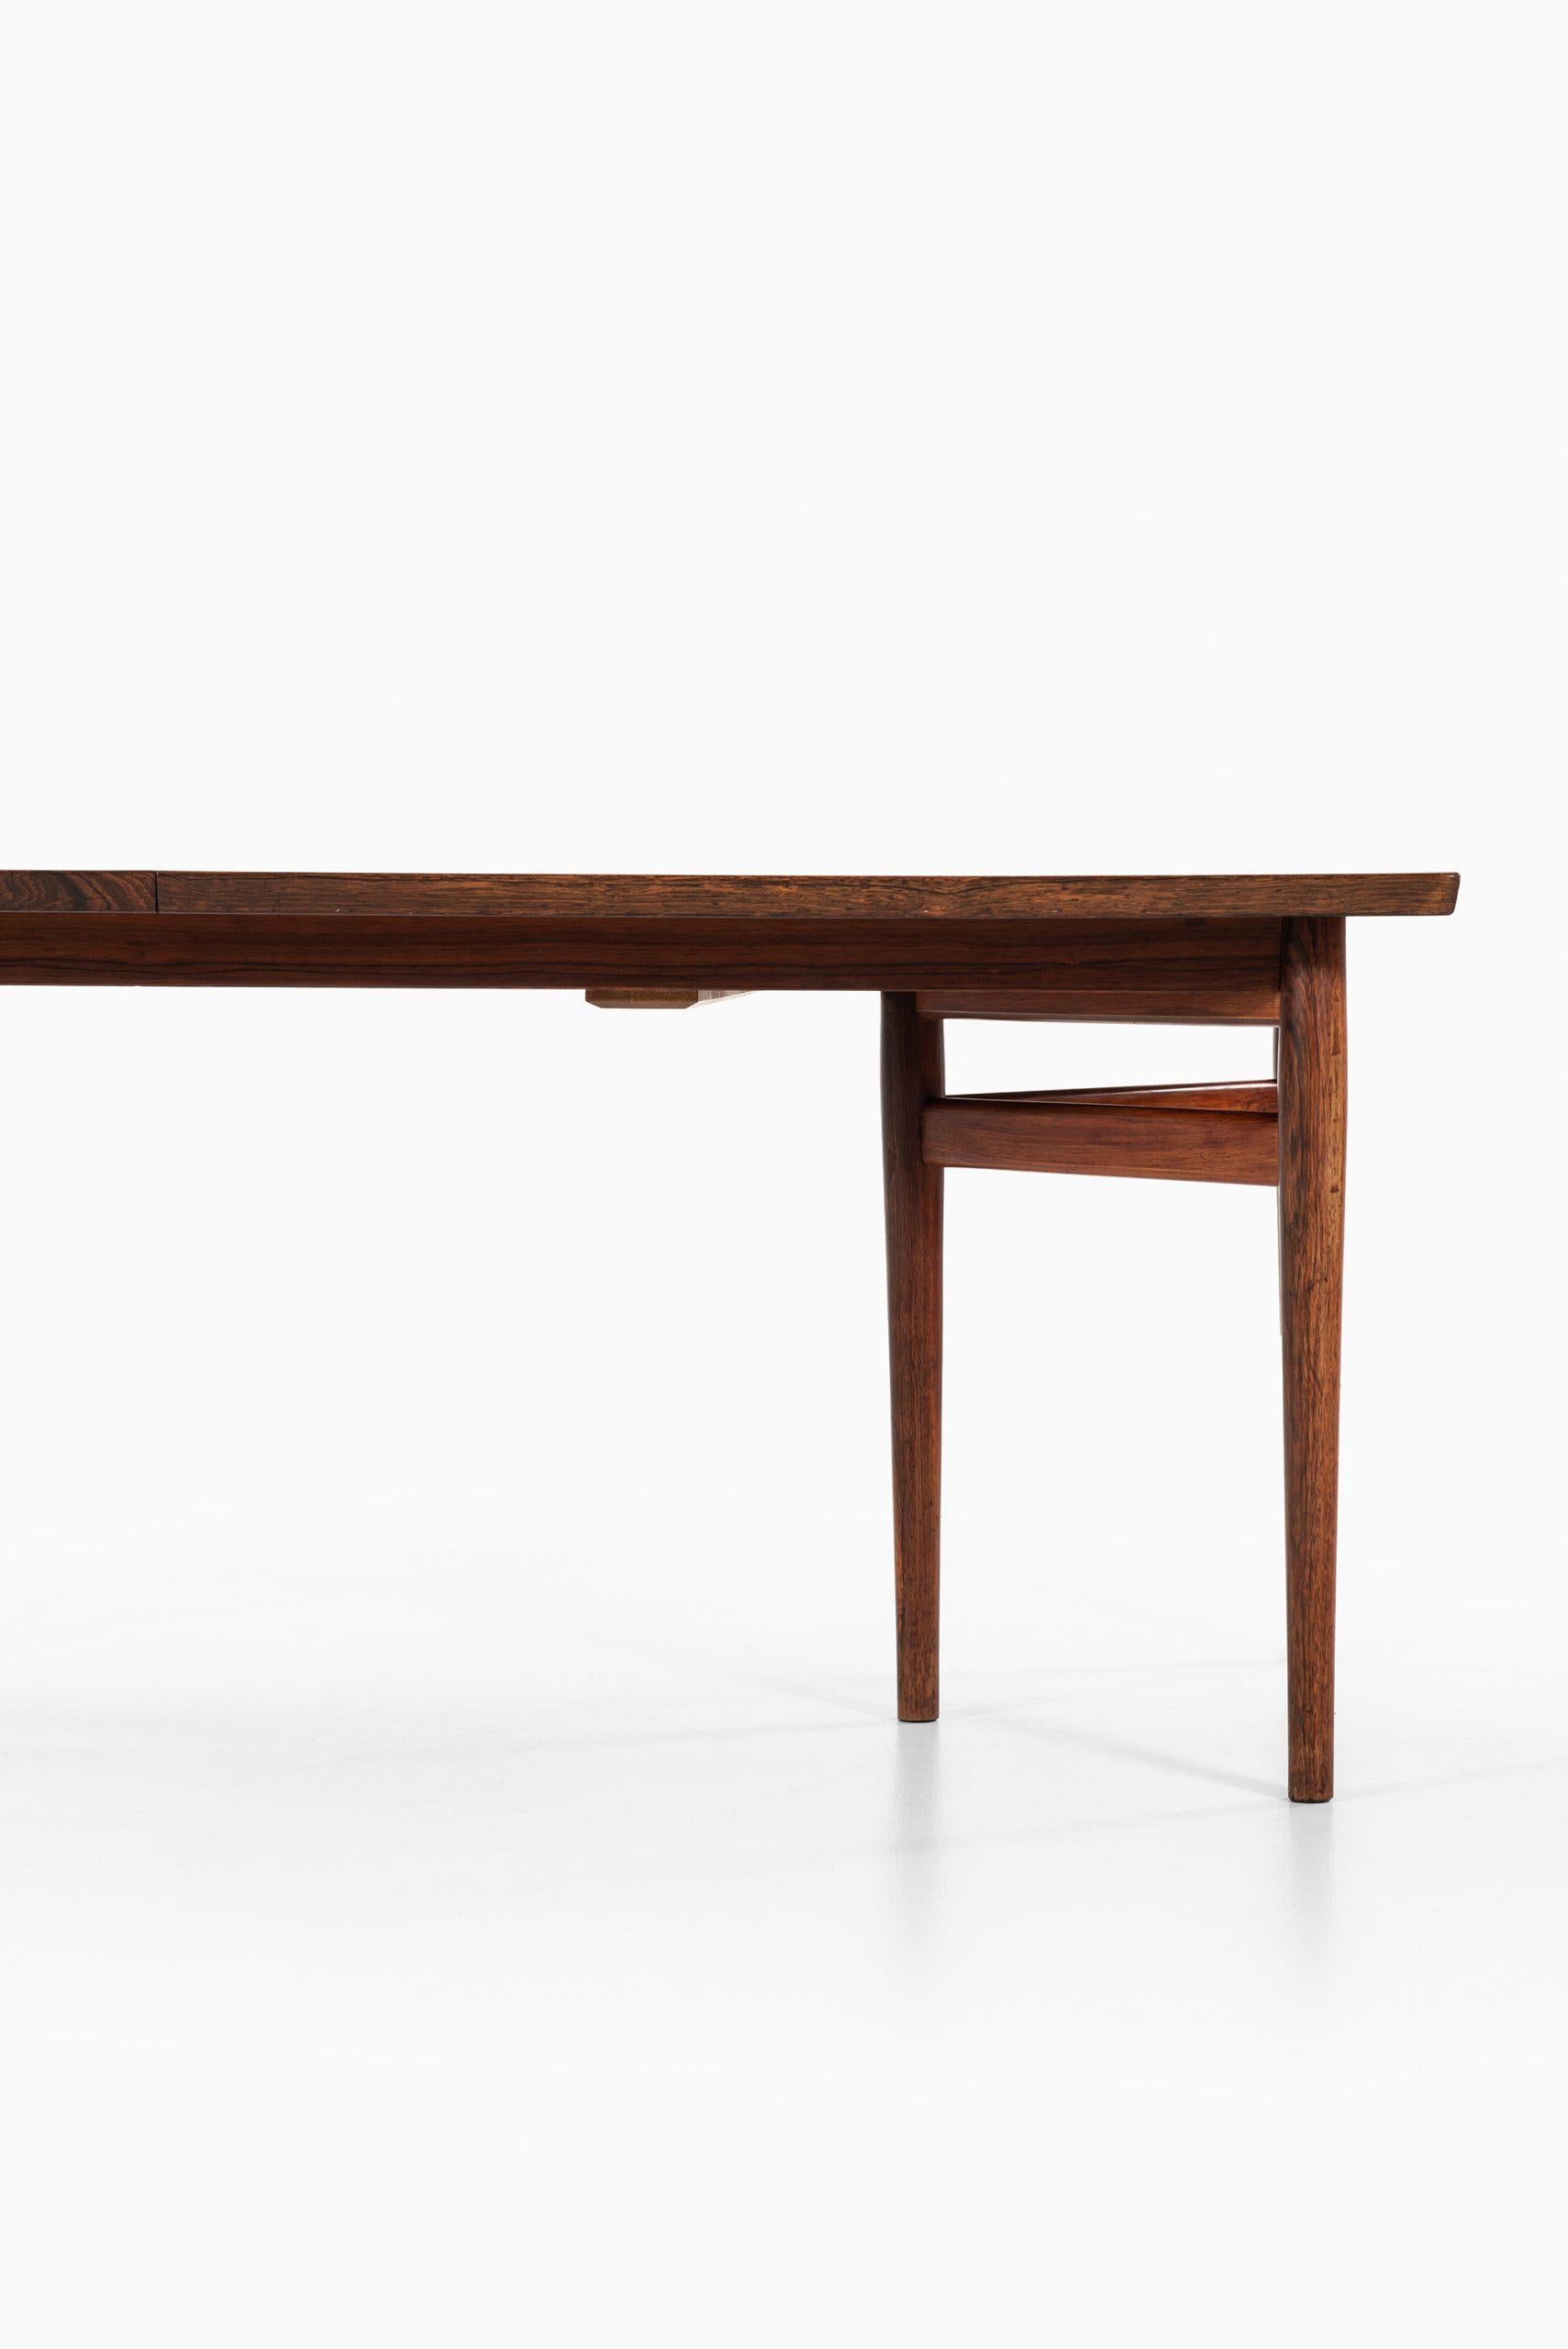 Rare dining table model 201 designed by Arne Vodder. Produced by Sibast Møbelfabrik in Denmark. Measure: Width 200 ( 300 ) cm.